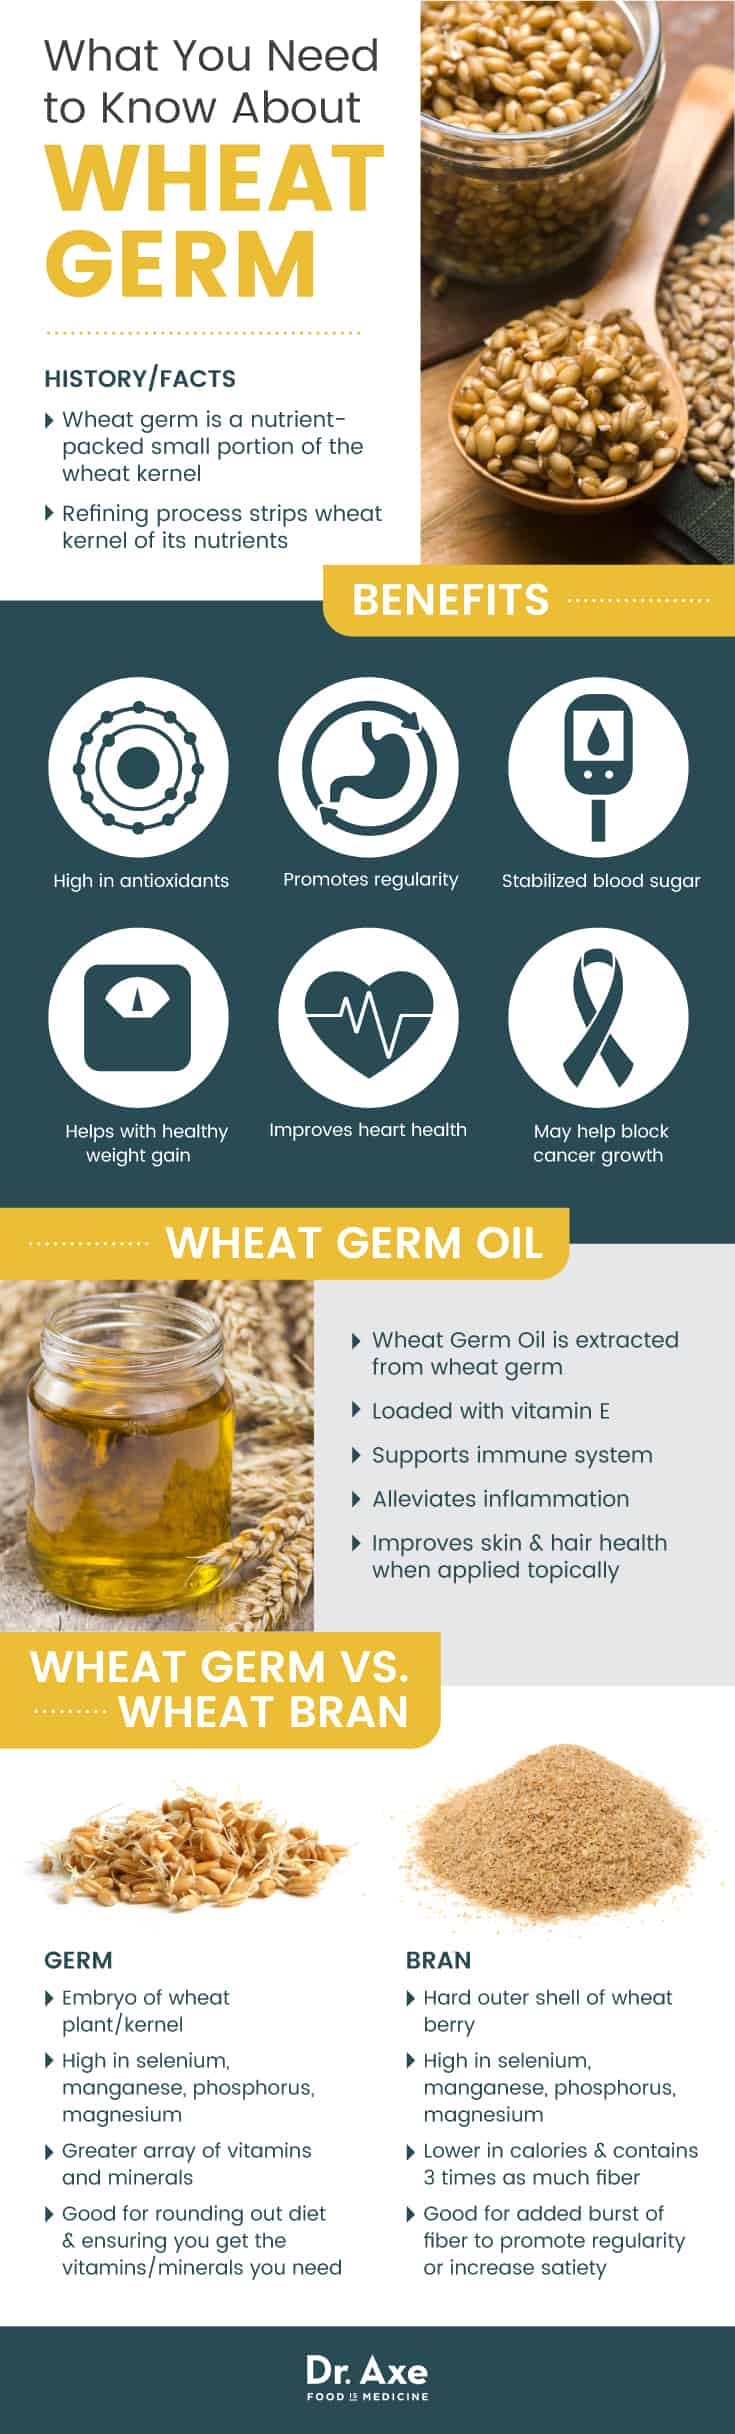 Wheat Germ Benefits the Gut, Heart & Blood Sugar Levels | Best Pure ...